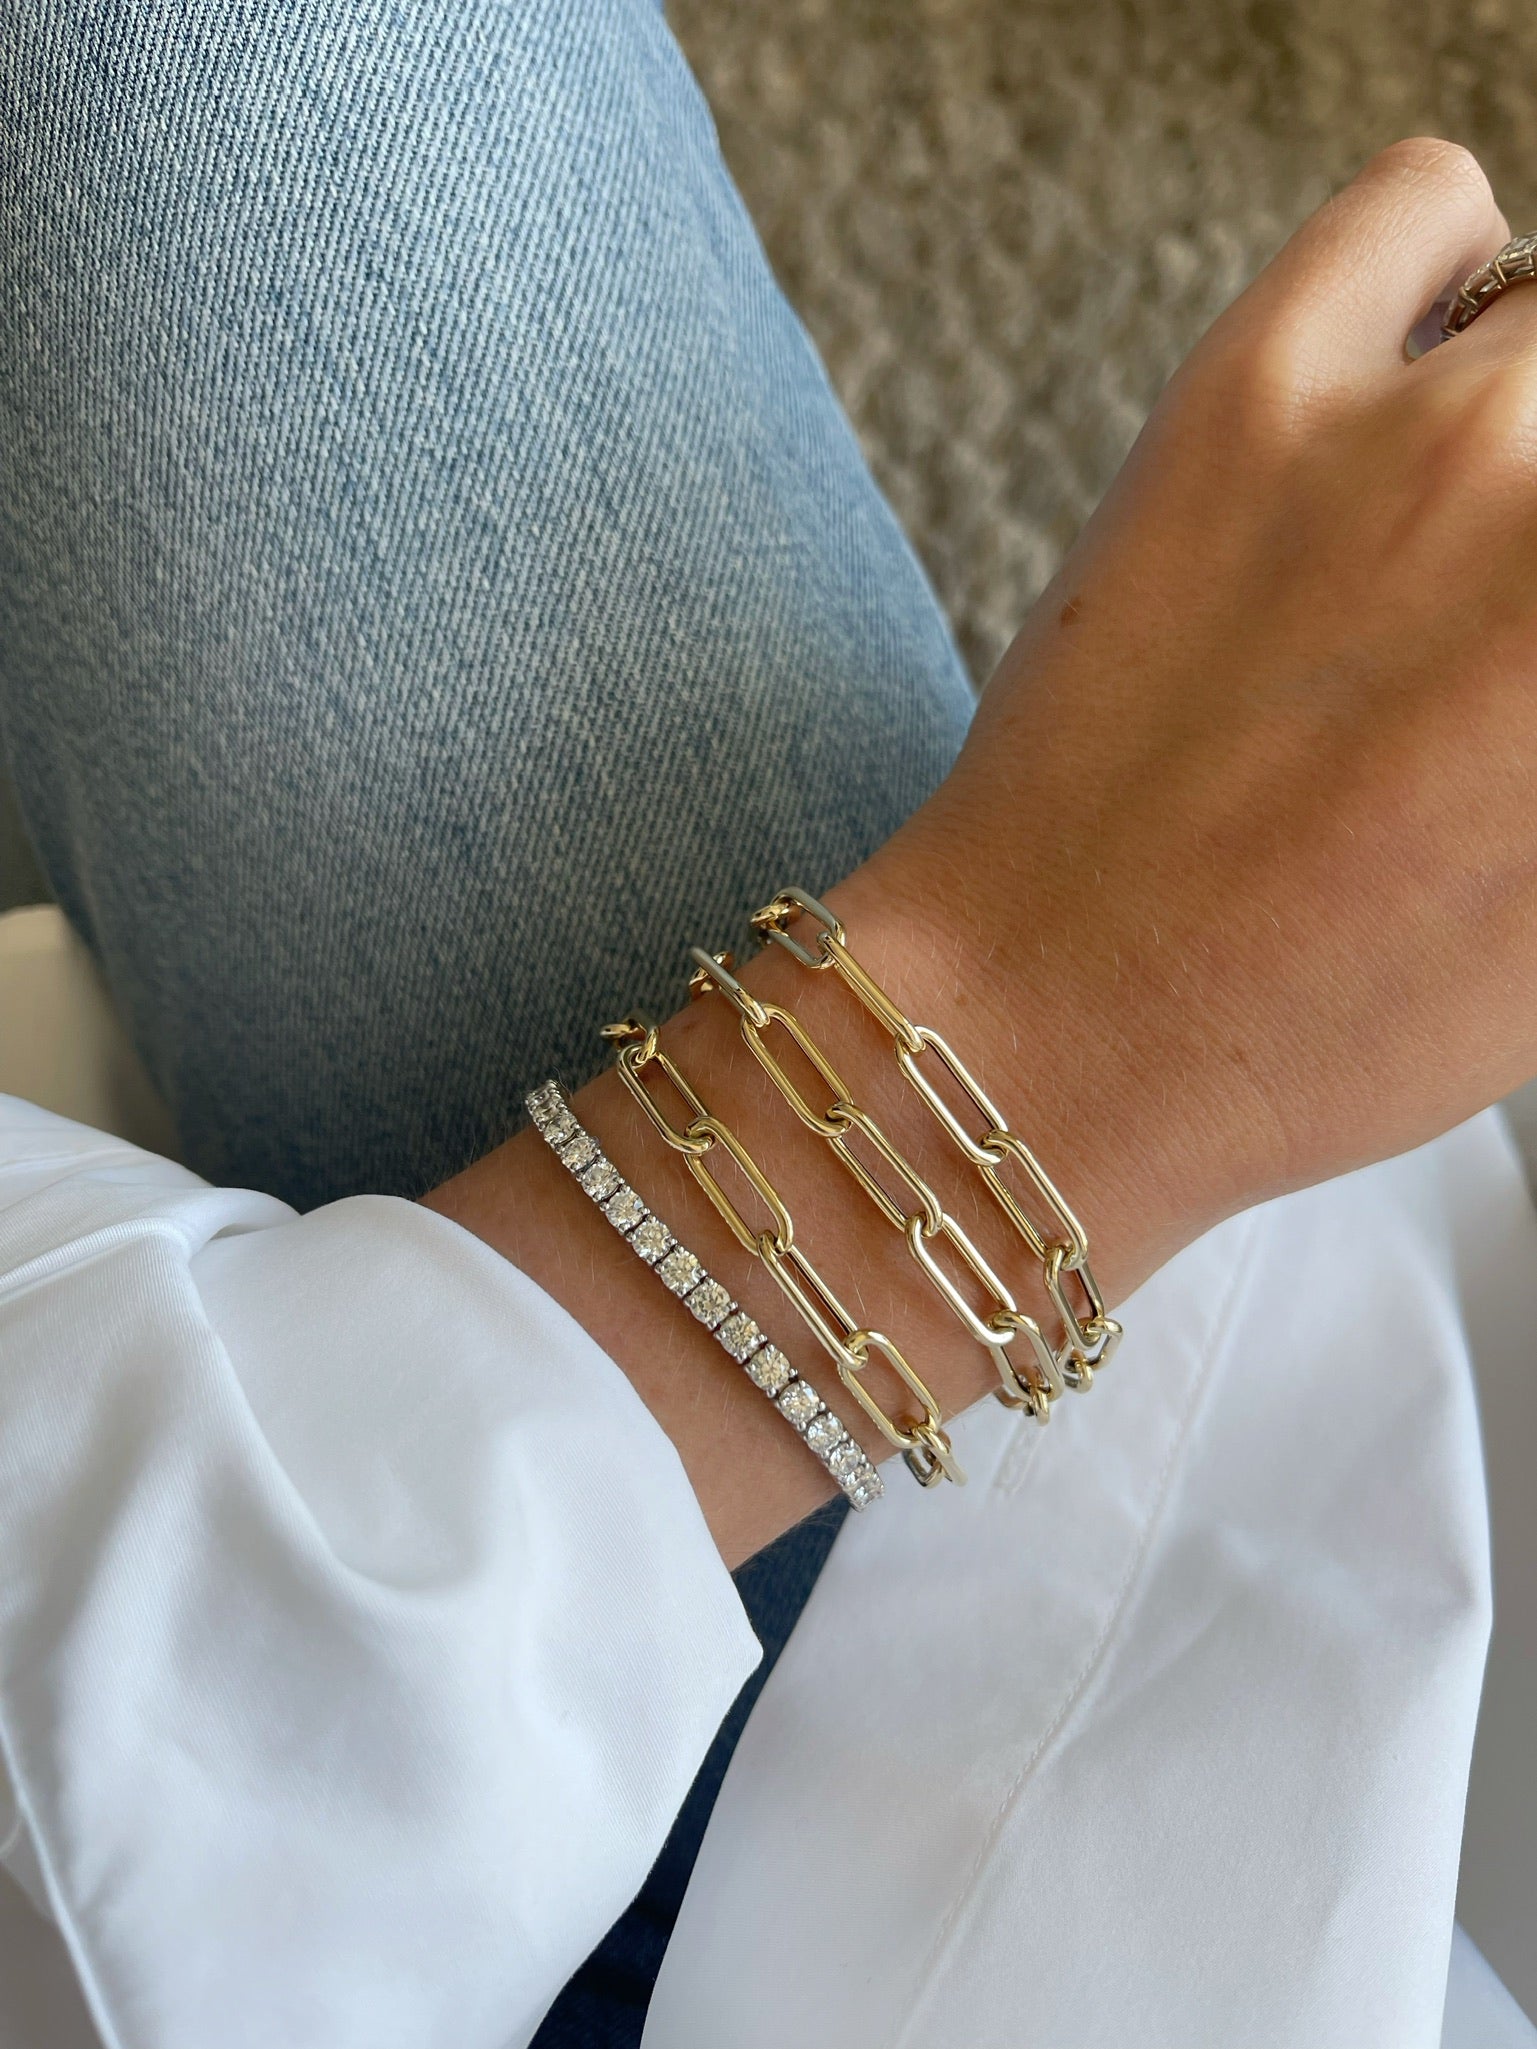 Jumbo Lola Chain Necklace And Triple Wrap Bracelet Styled on Wrist of Model